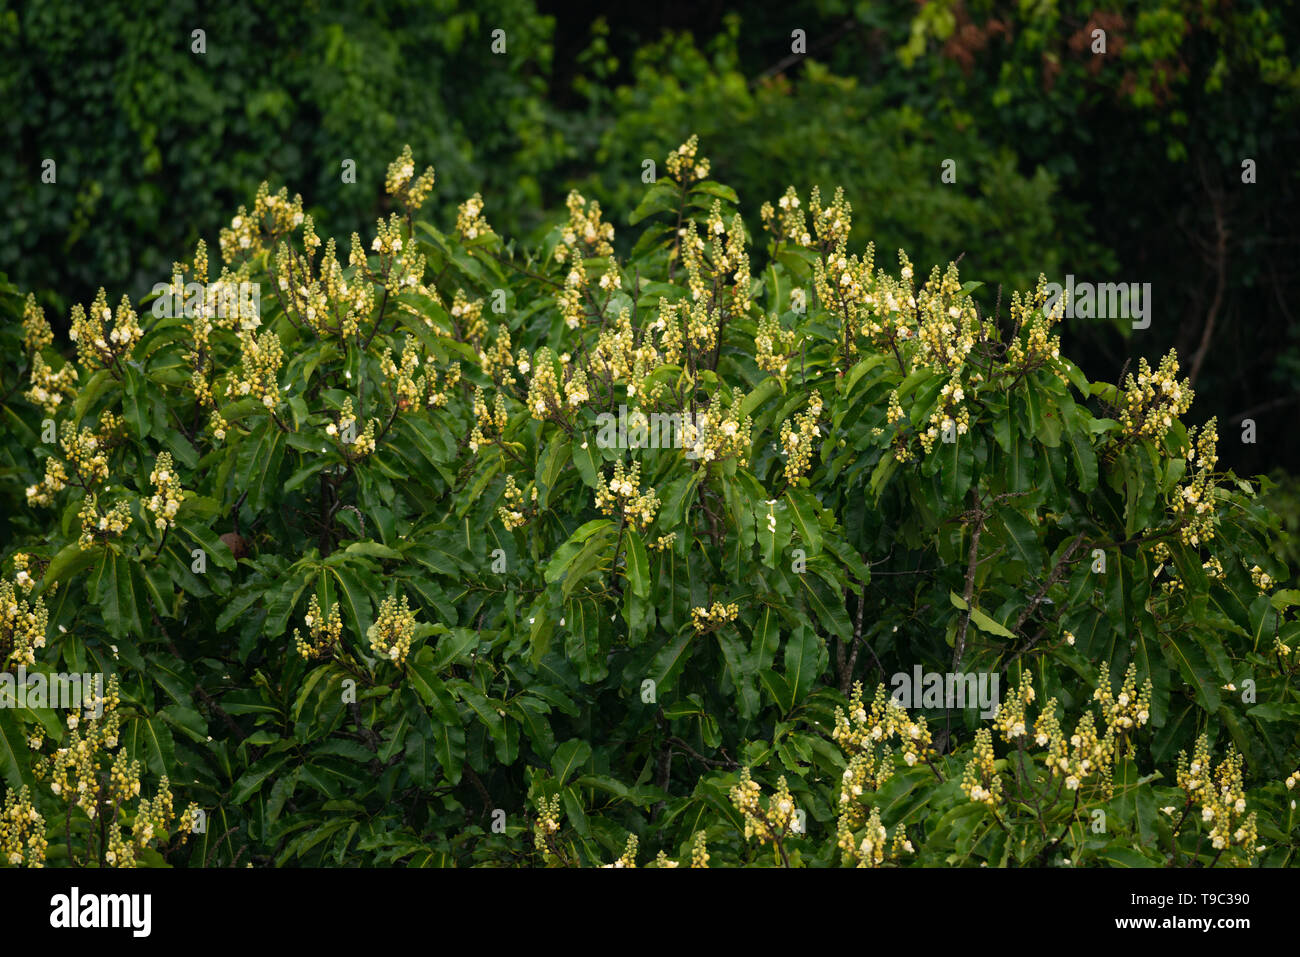 Brazil nut tree (Bertholletia excelsa) canopy during the flowering season Stock Photo